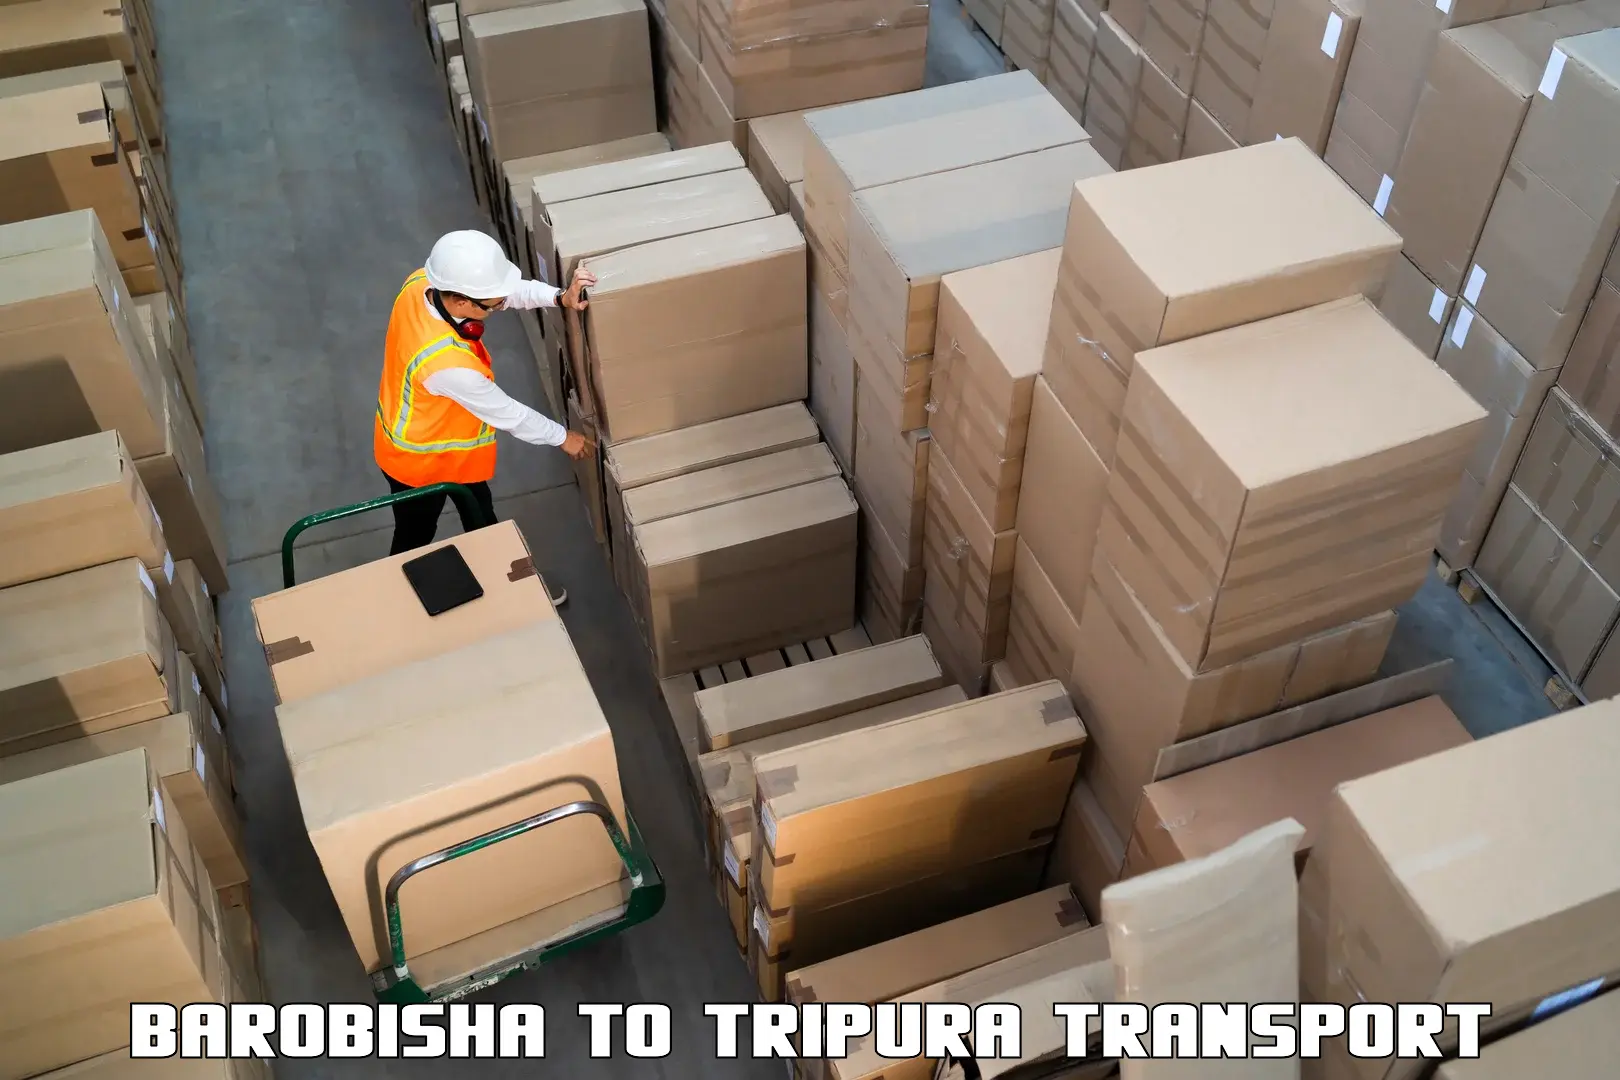 Truck transport companies in India Barobisha to Udaipur Tripura